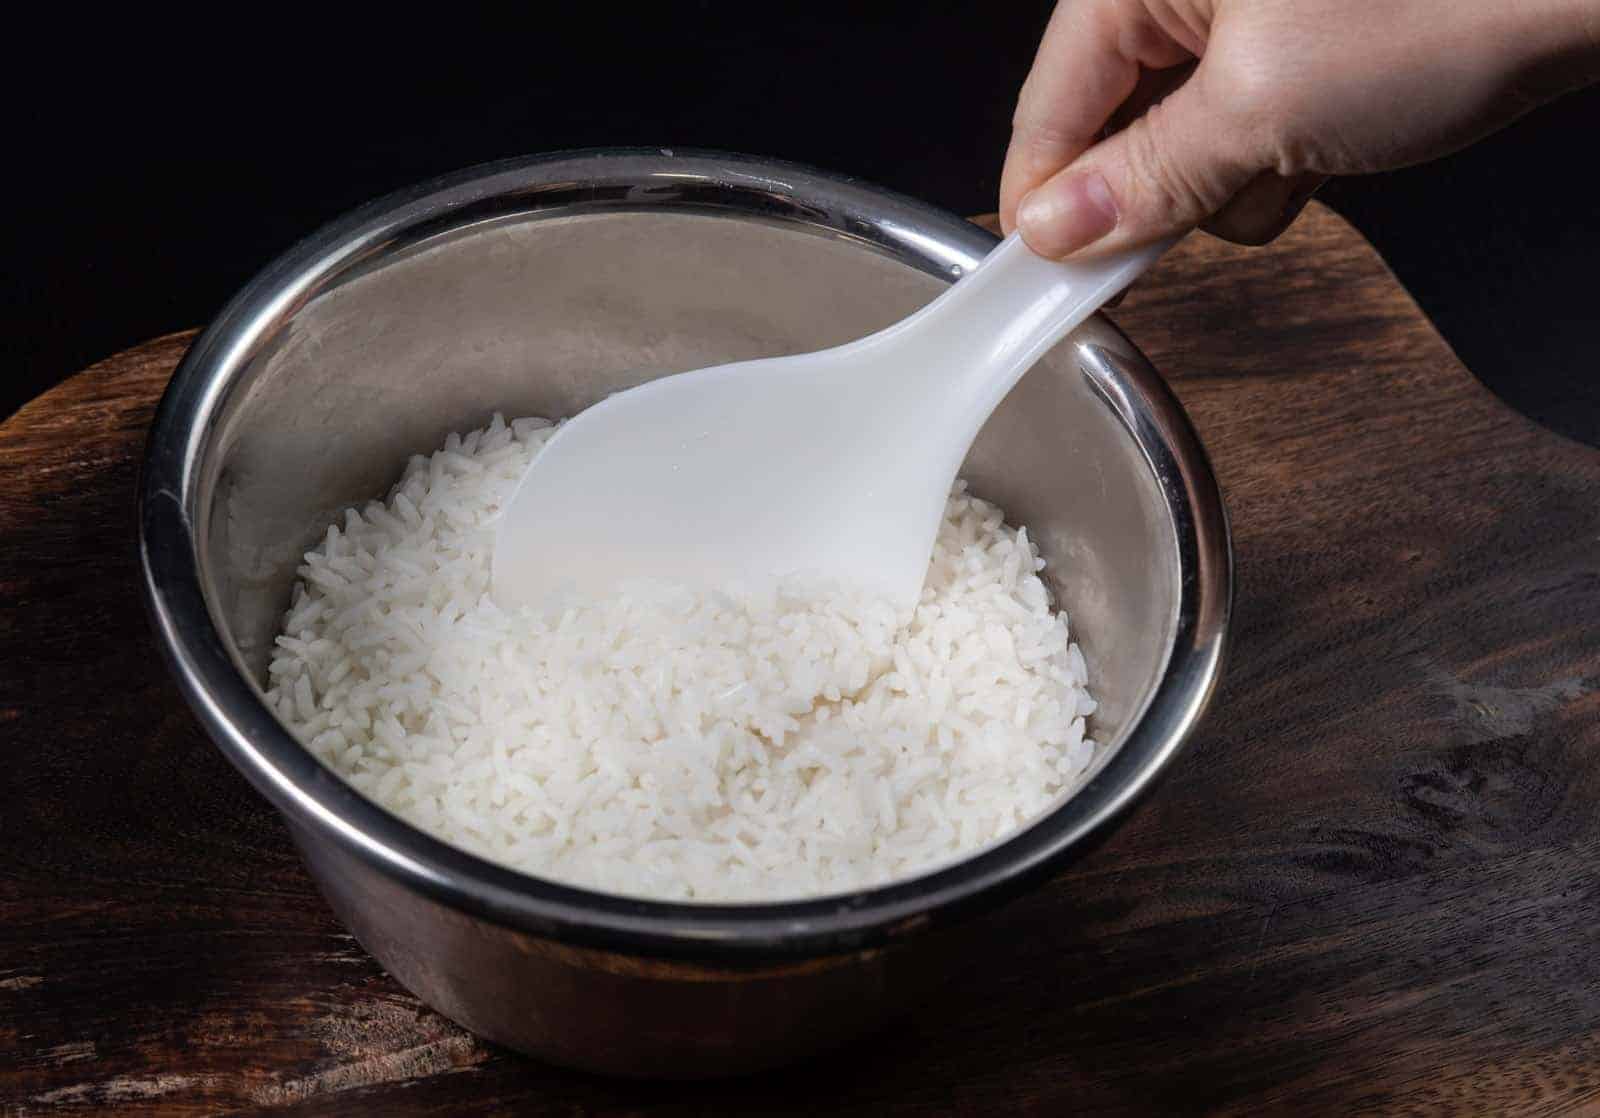 https://www.pressurecookrecipes.com/wp-content/uploads/2019/02/how-to-cook-pot-in-pot-rice.jpg